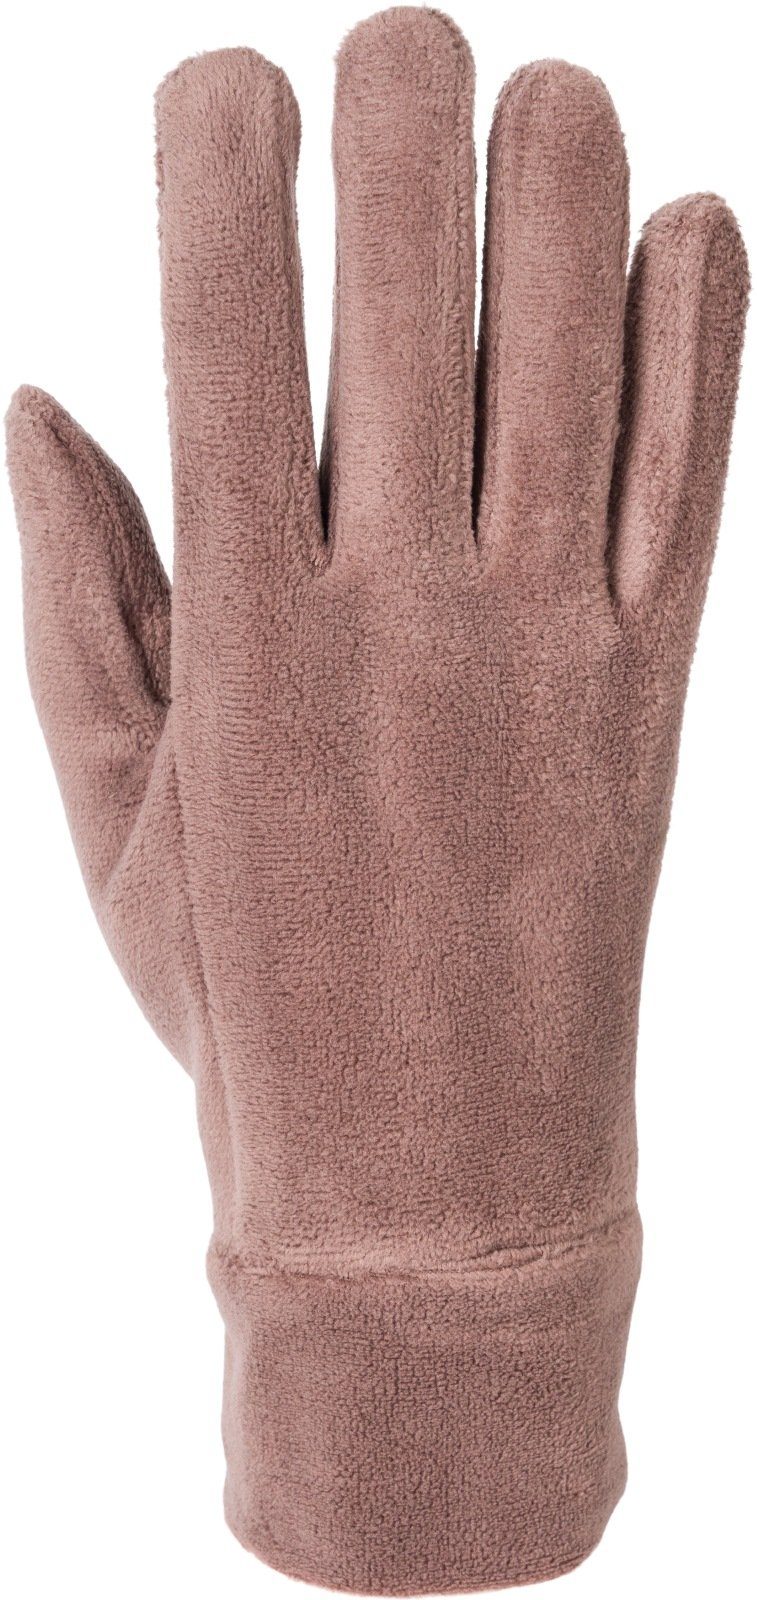 Einfarbige Fleecehandschuhe Touchscreen Fleece Mokkabraun Handschuhe styleBREAKER